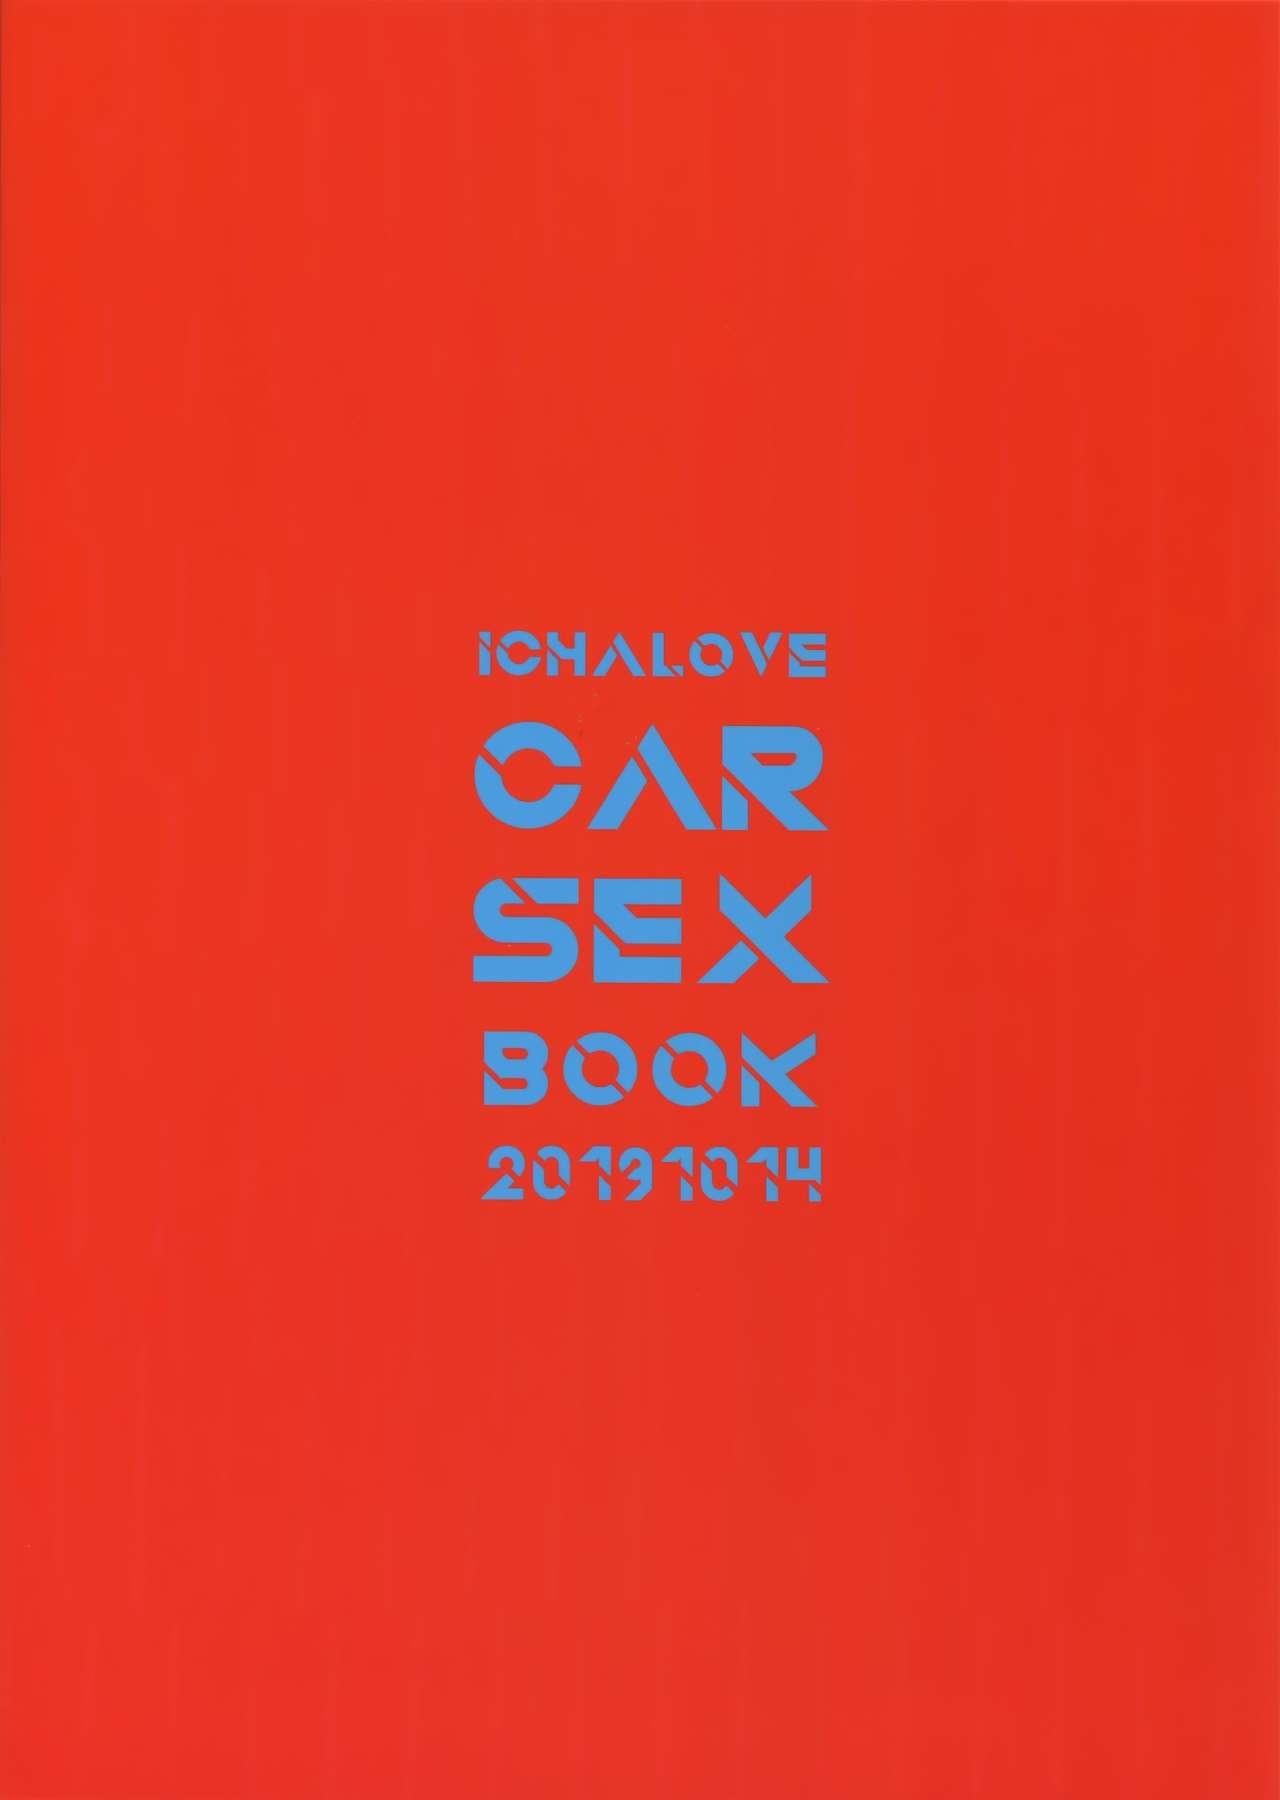 Ichalove Car Sex Book 29